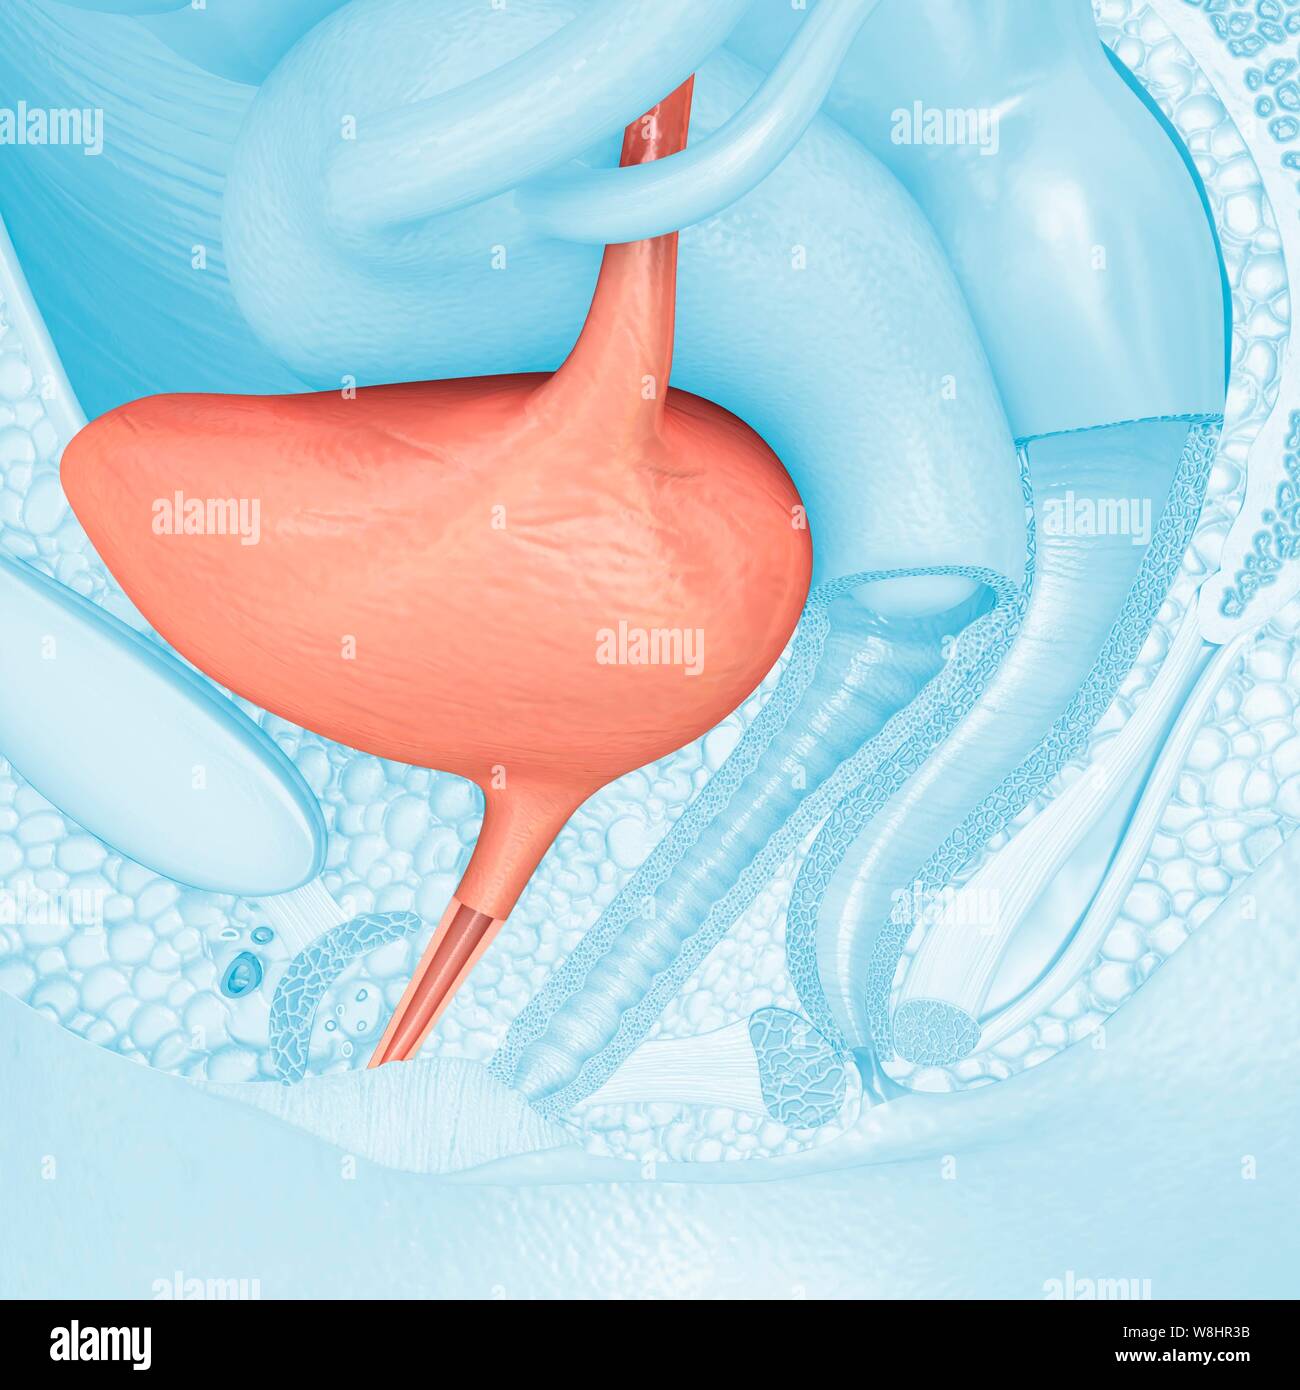 Illustration of female bladder and urethra. Stock Photo